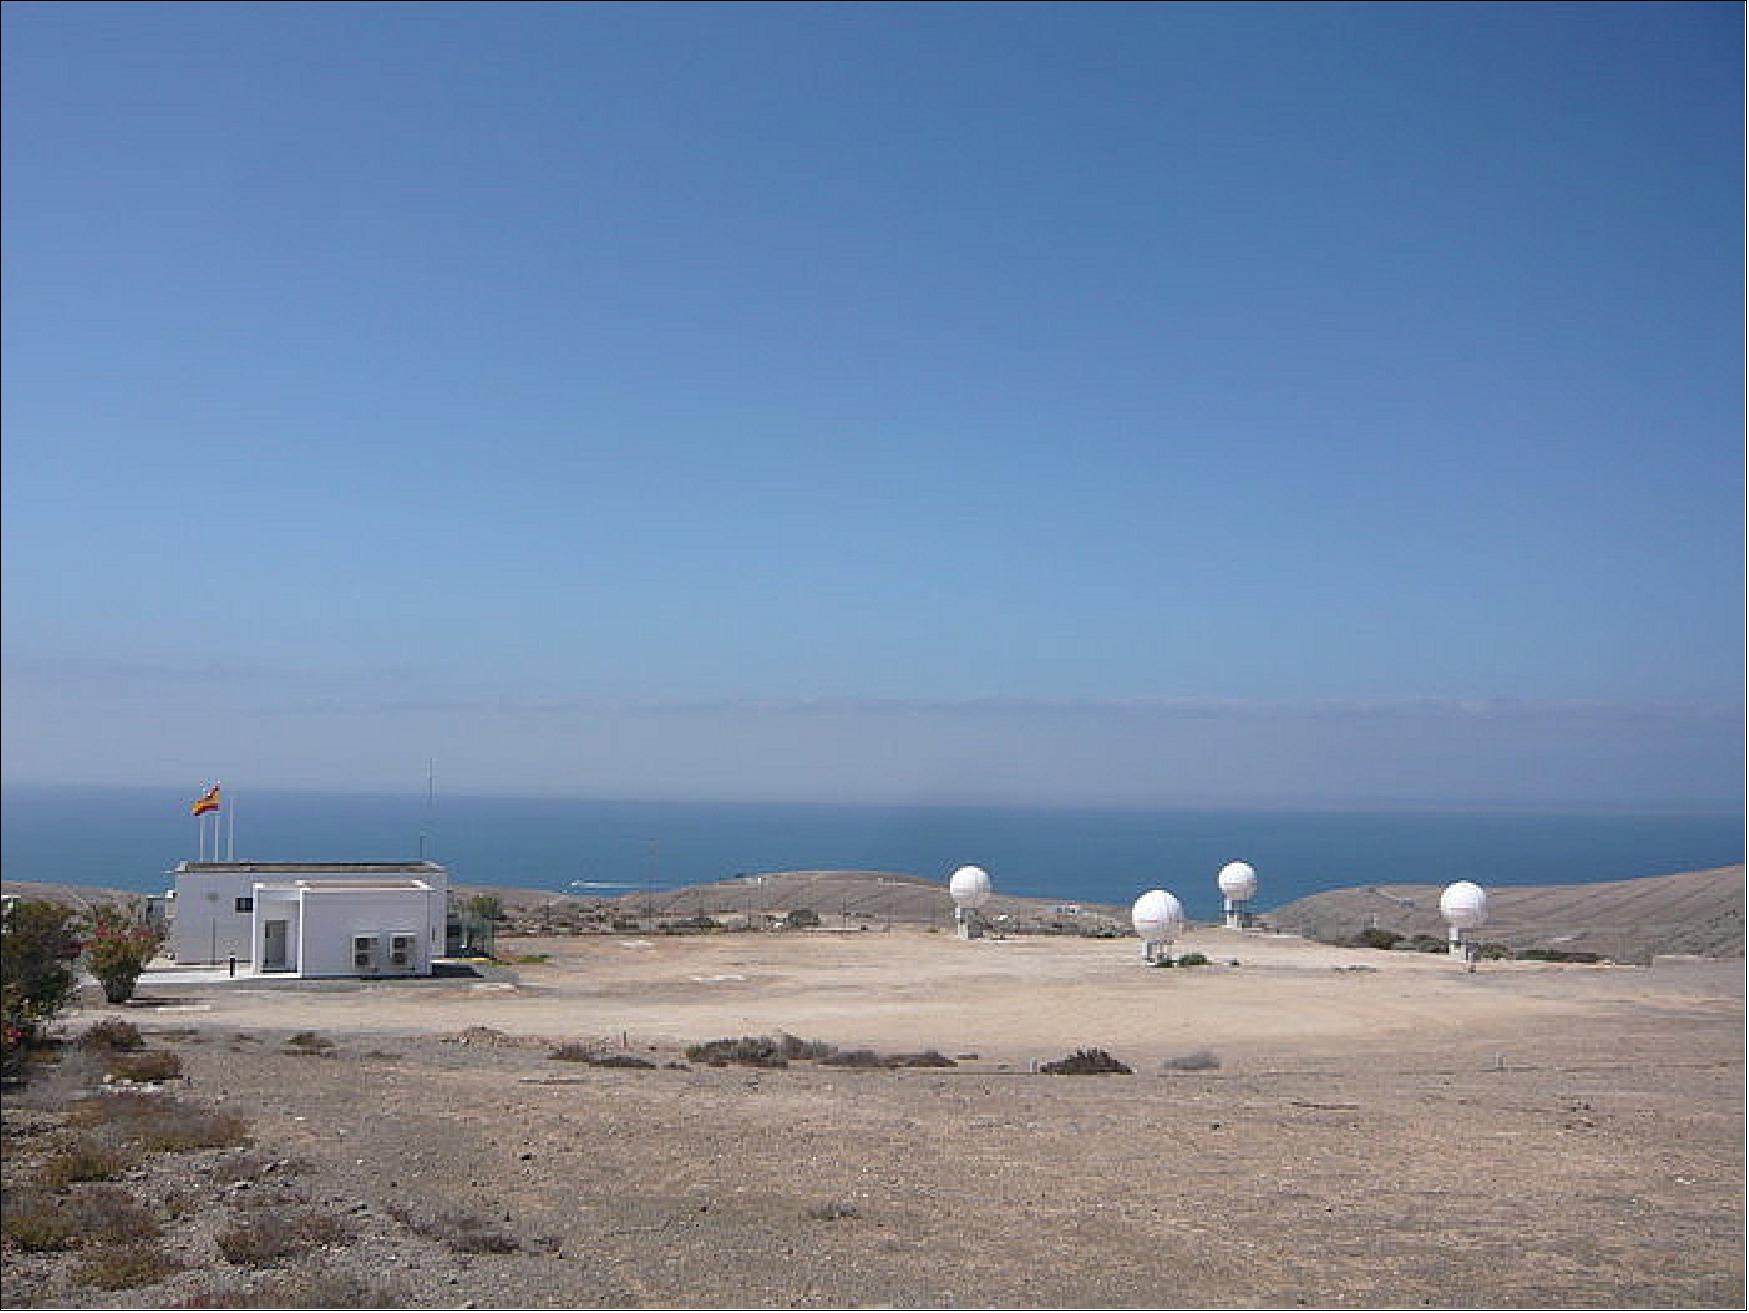 Figure 120: Photo of the Maspalomas MEOLUT (Medium-Earth Orbit Local User Terminal) station (image credit: ESA, Fermin Alvarez Lopez) 144)